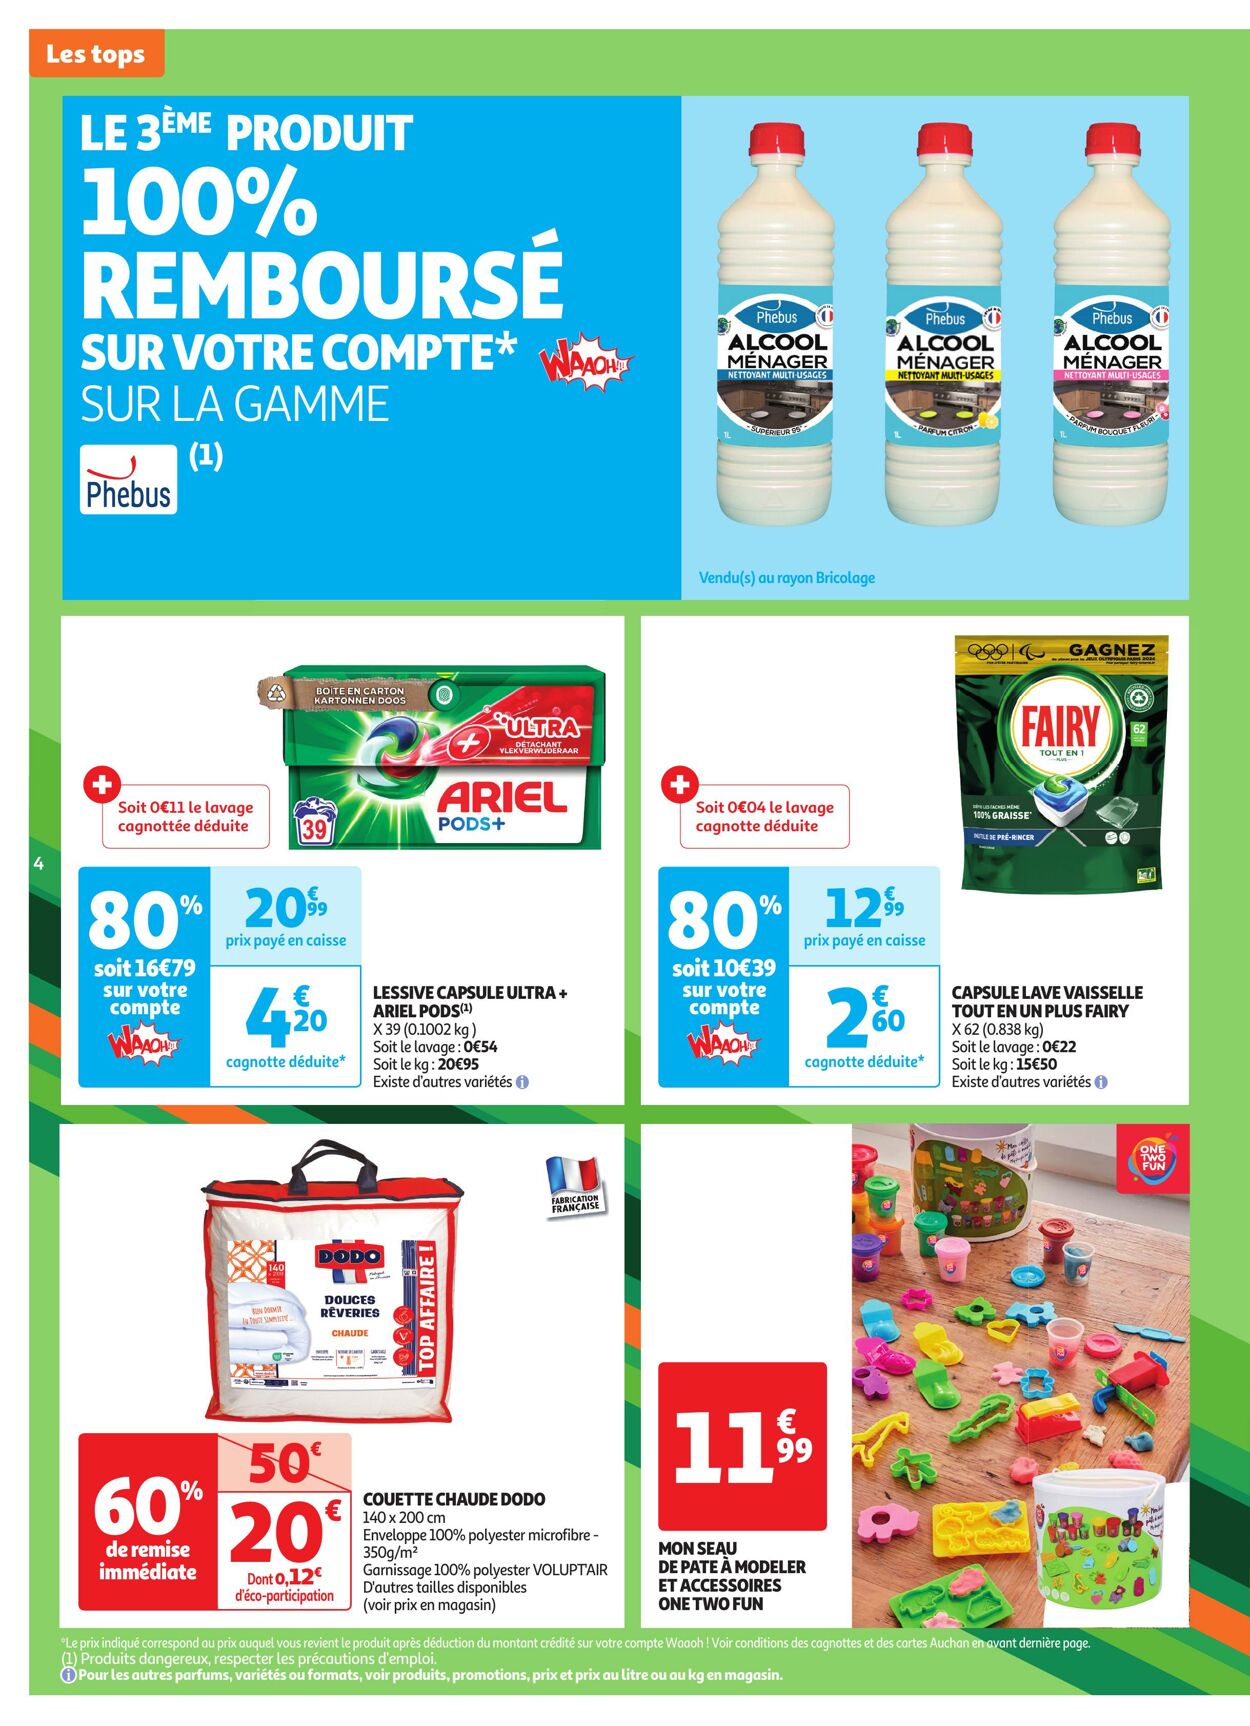 Catalogue Auchan 24.10.2023 - 29.10.2023